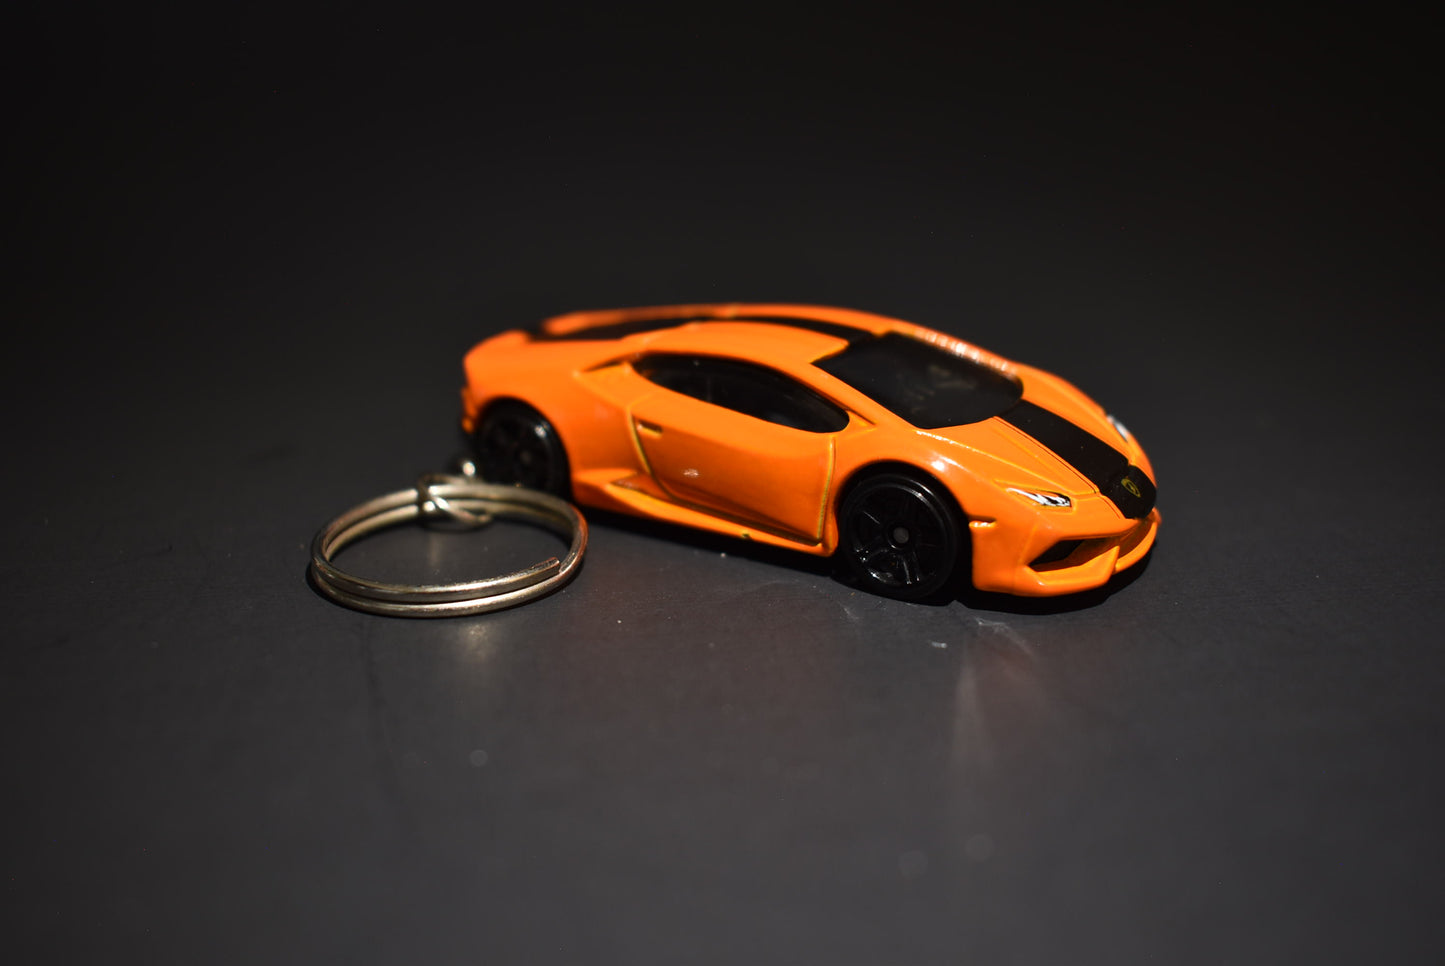 Lamborghini Huracan Hotwheels Keychain